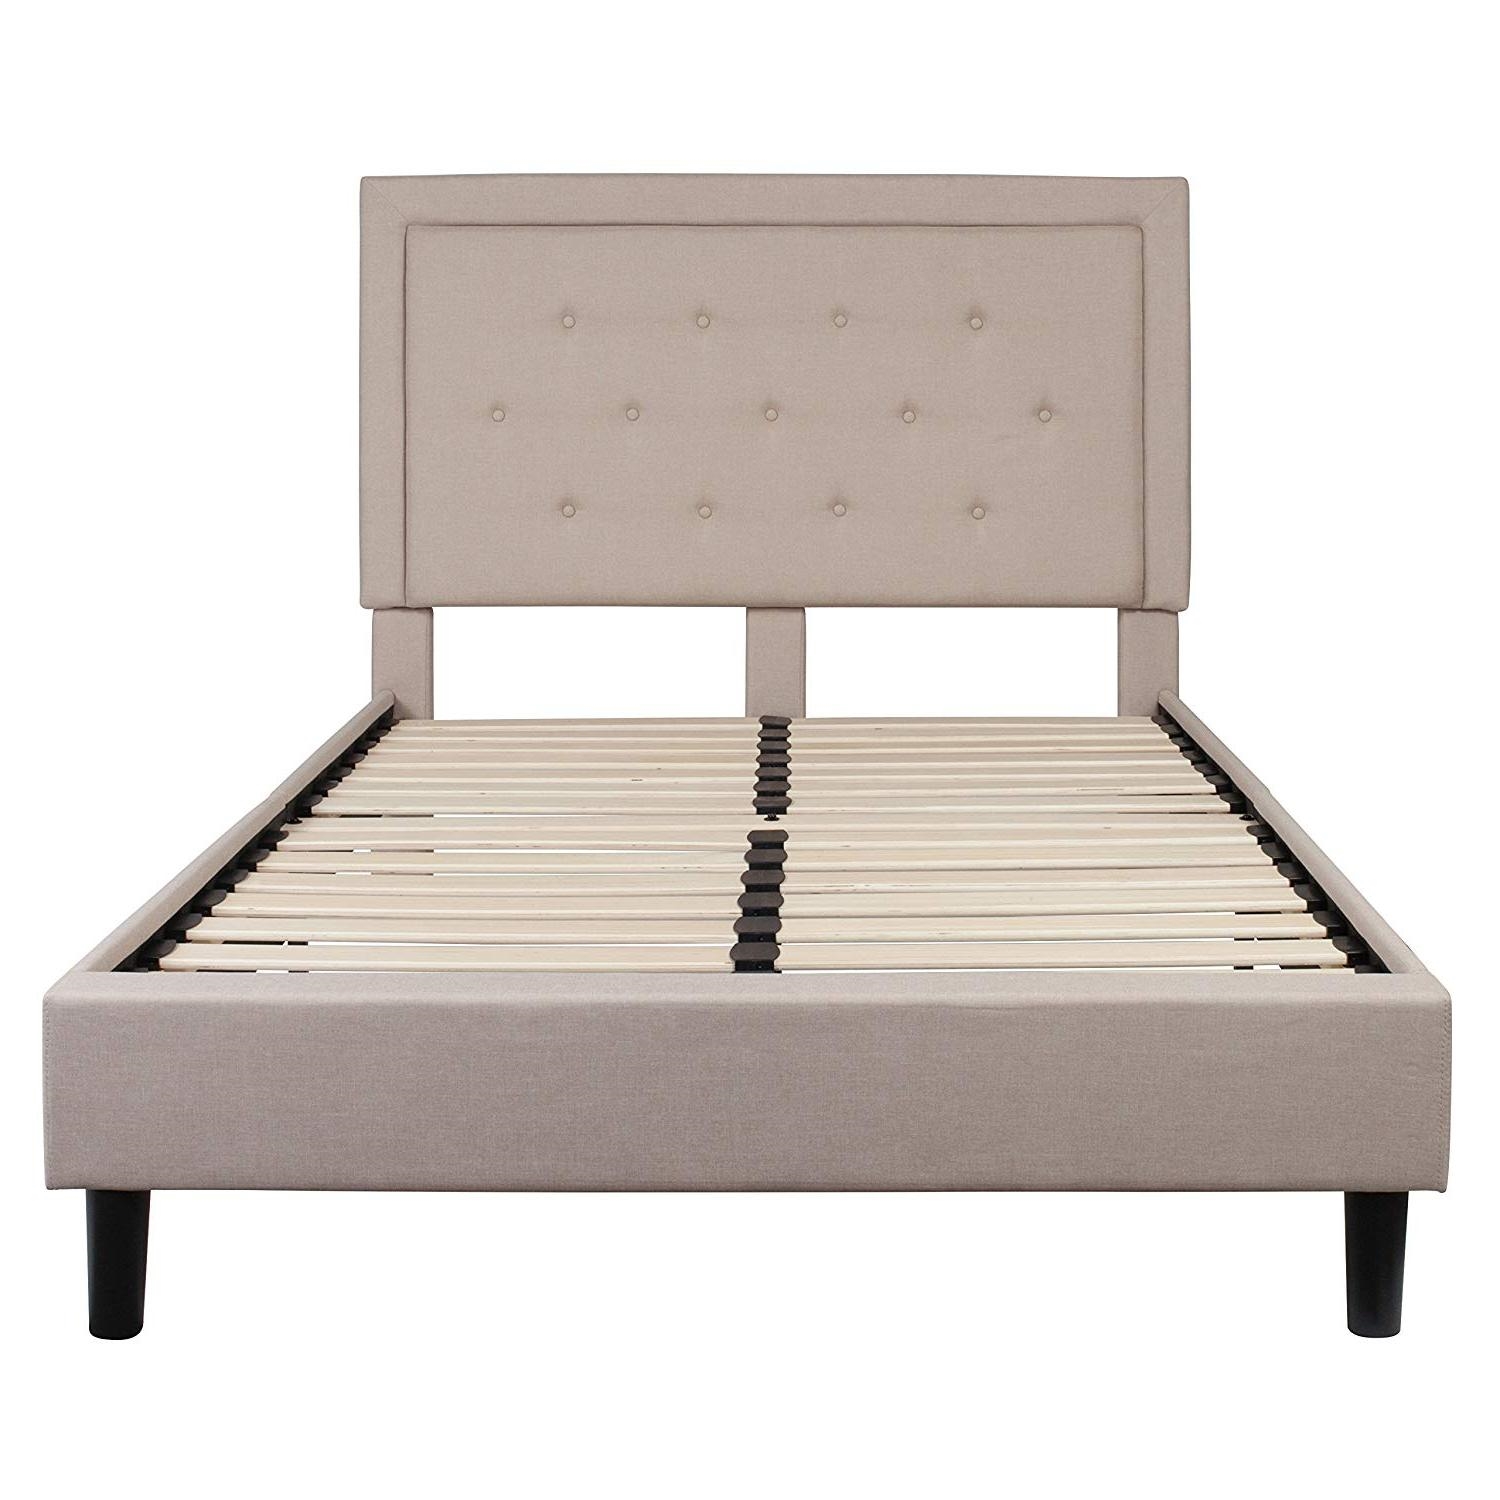 Full Size Upholstered Fabric Platform Bed Frame With Wood Slats in Beige 